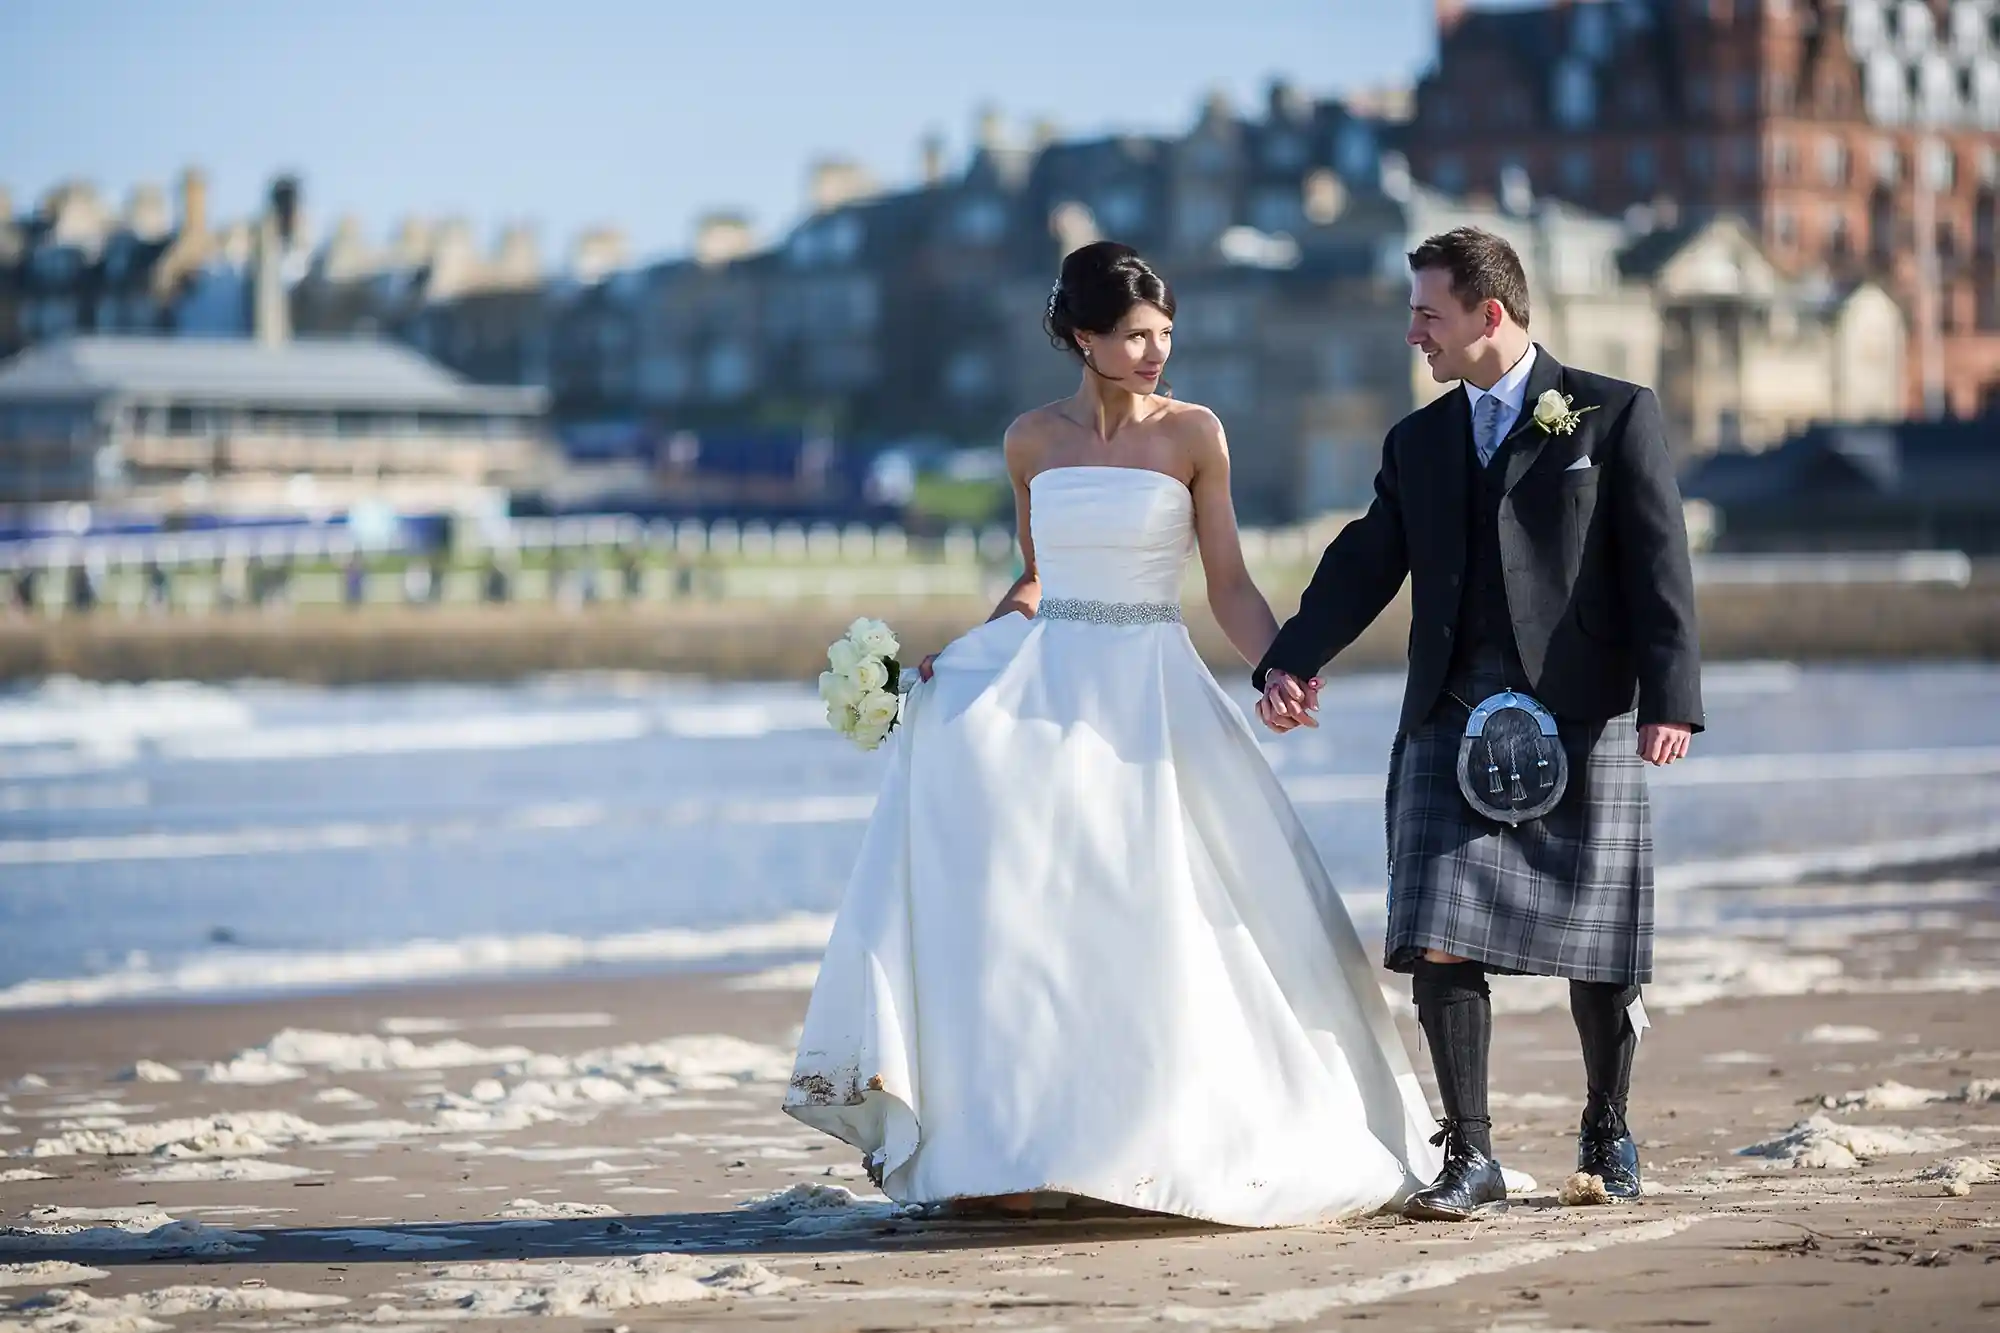 Wedding photographer Fife - St Andrews beach newlyweds walking hand-in-hand